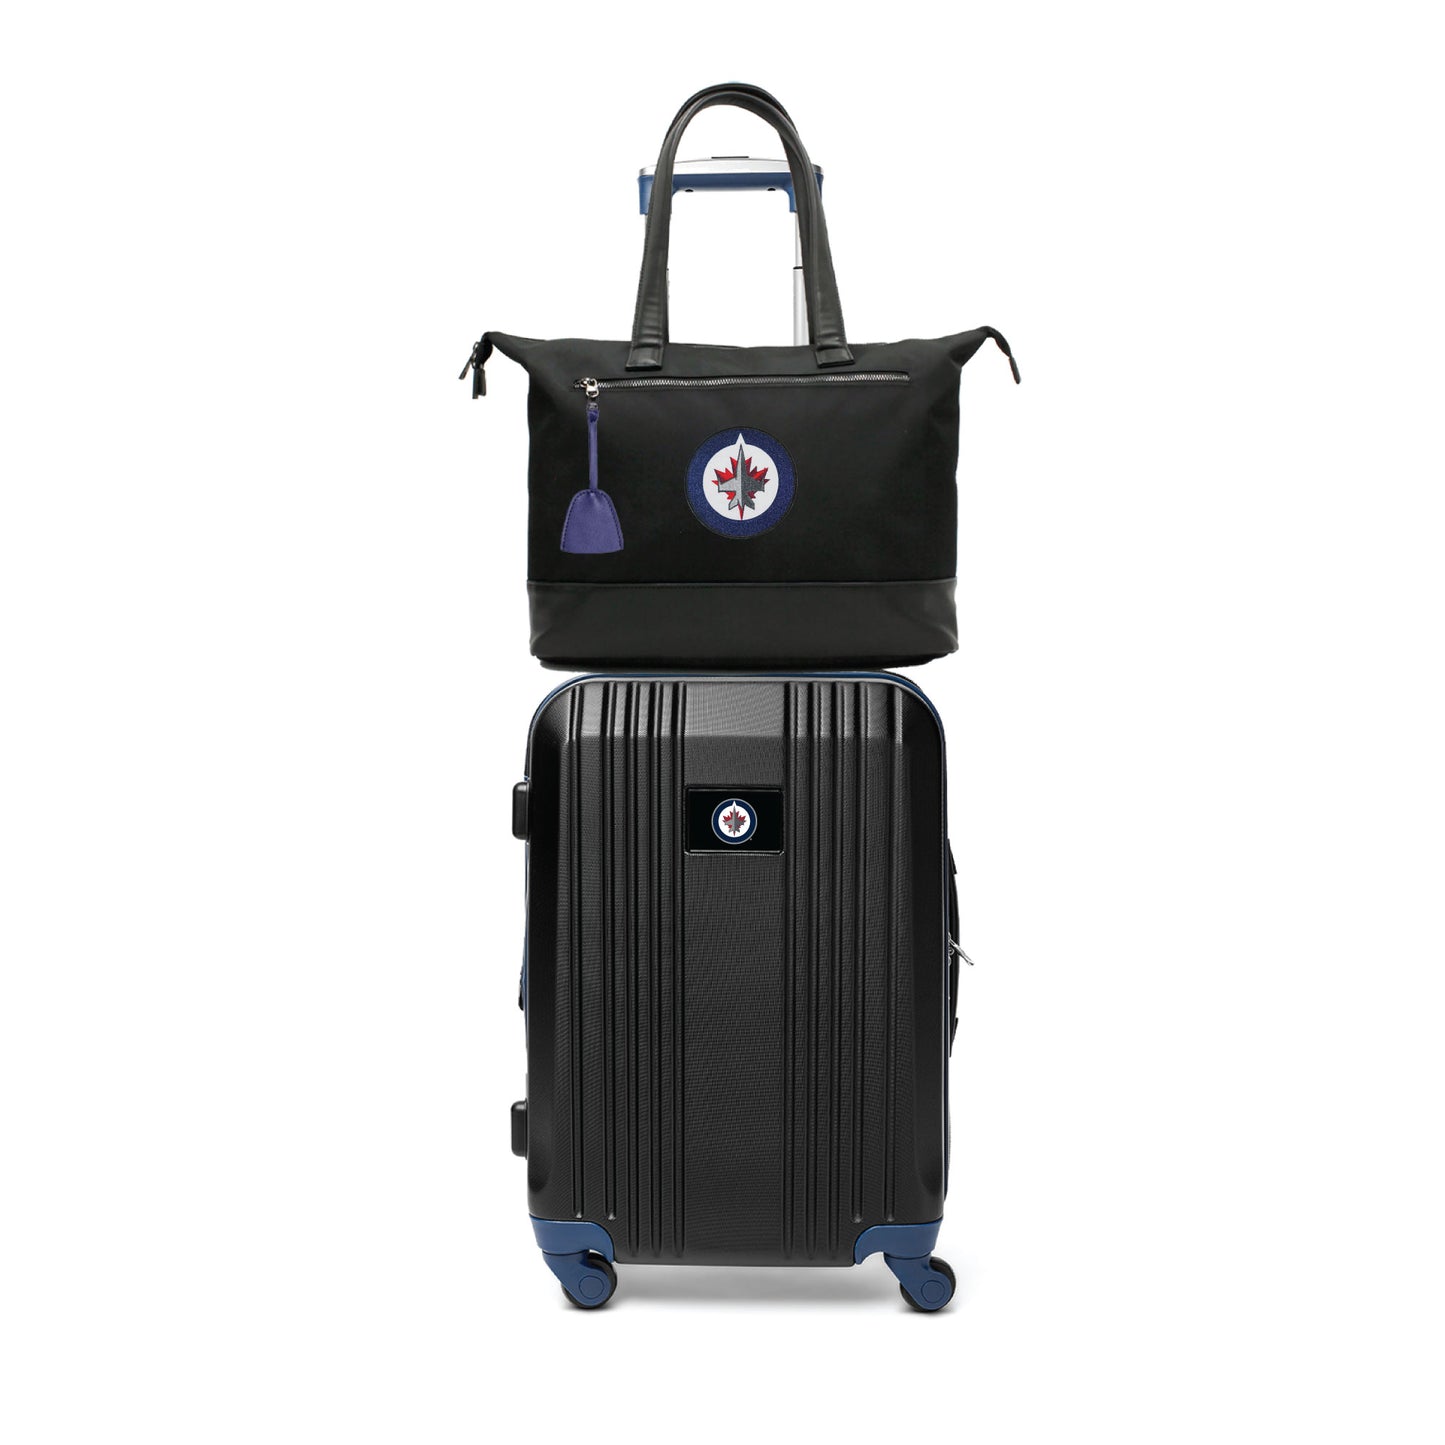 Winnipeg Jets Premium Laptop Tote Bag and Luggage Set